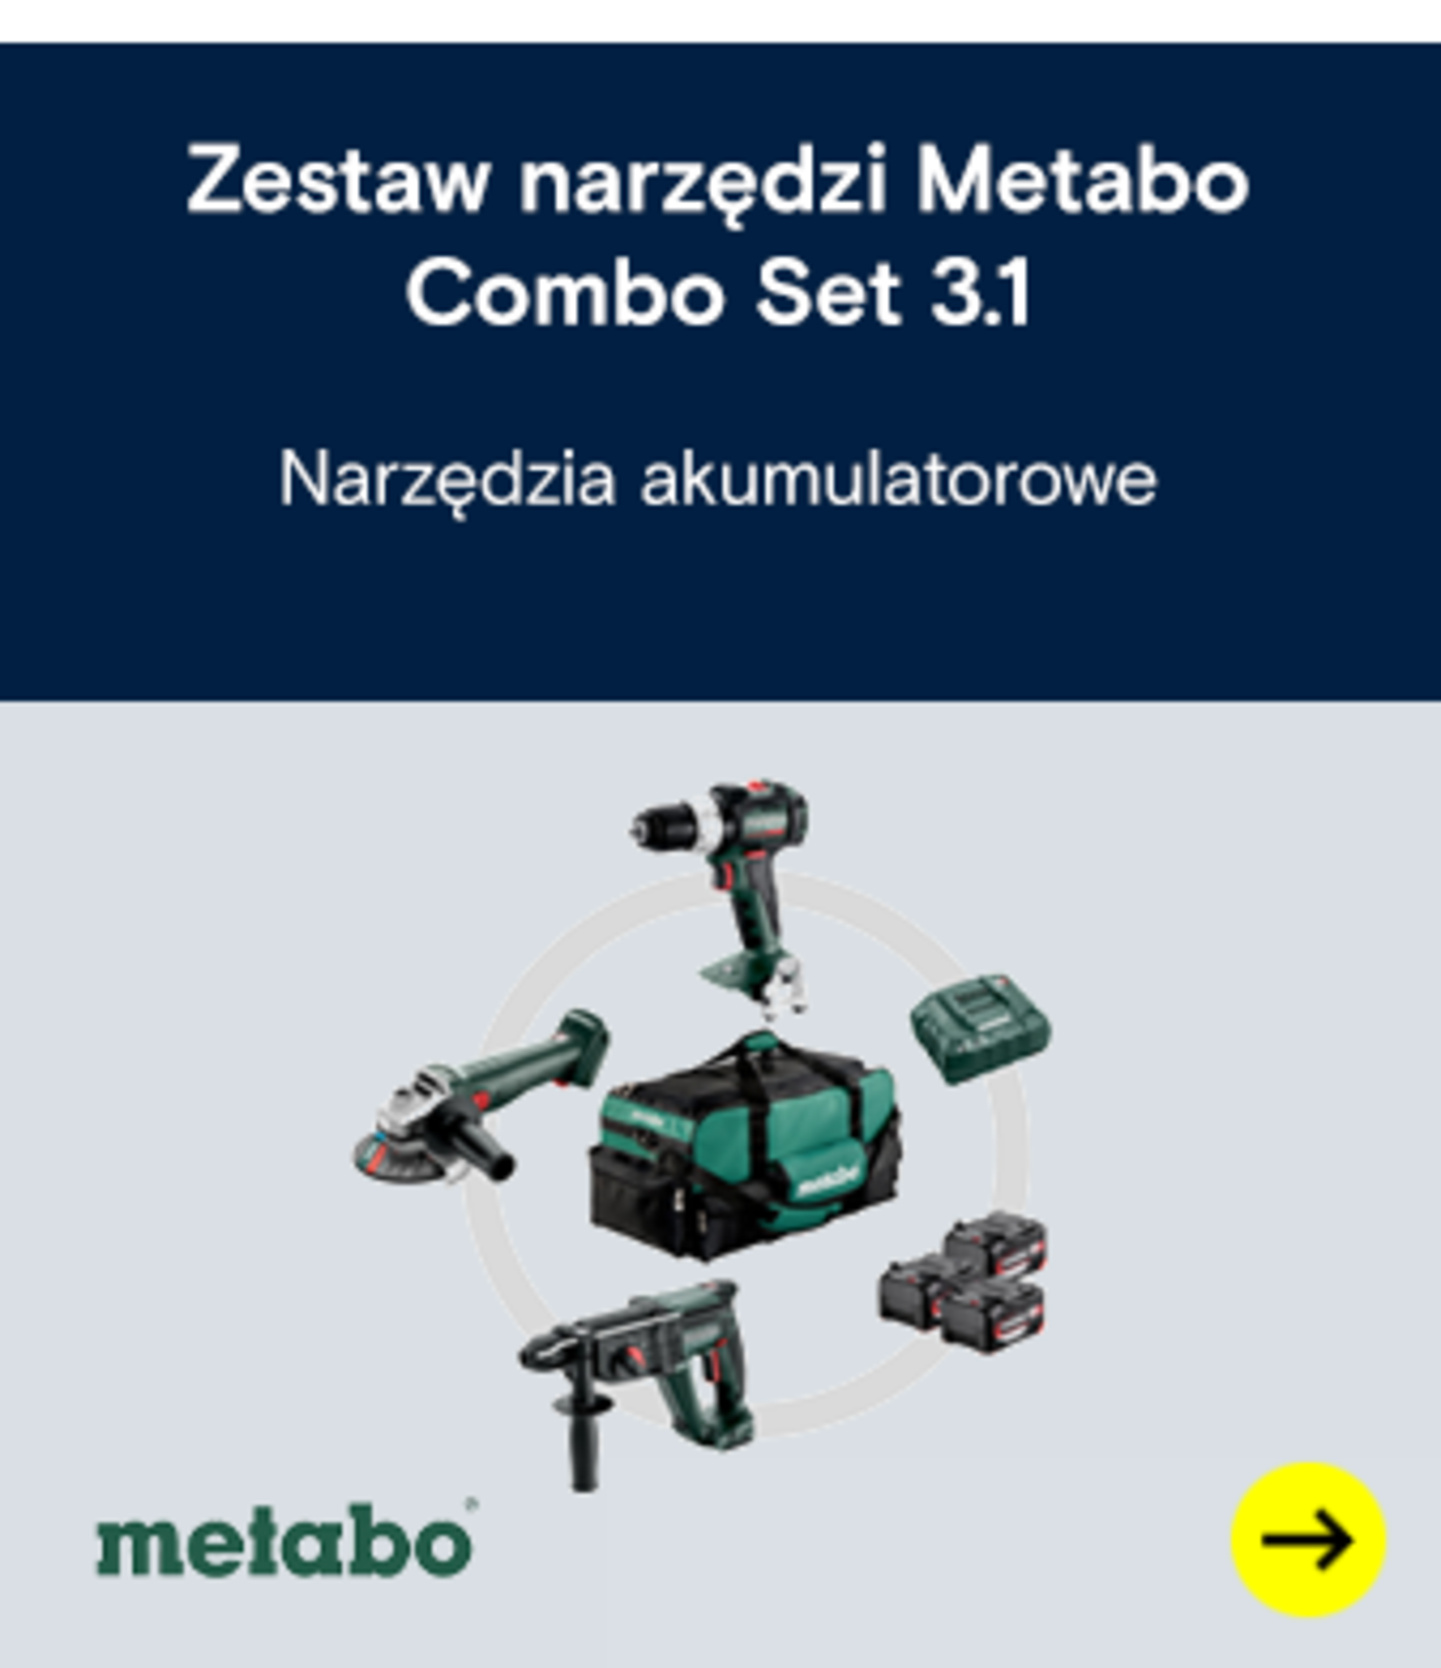 Zestaw narzędzi Metabo Combo Set 3.1